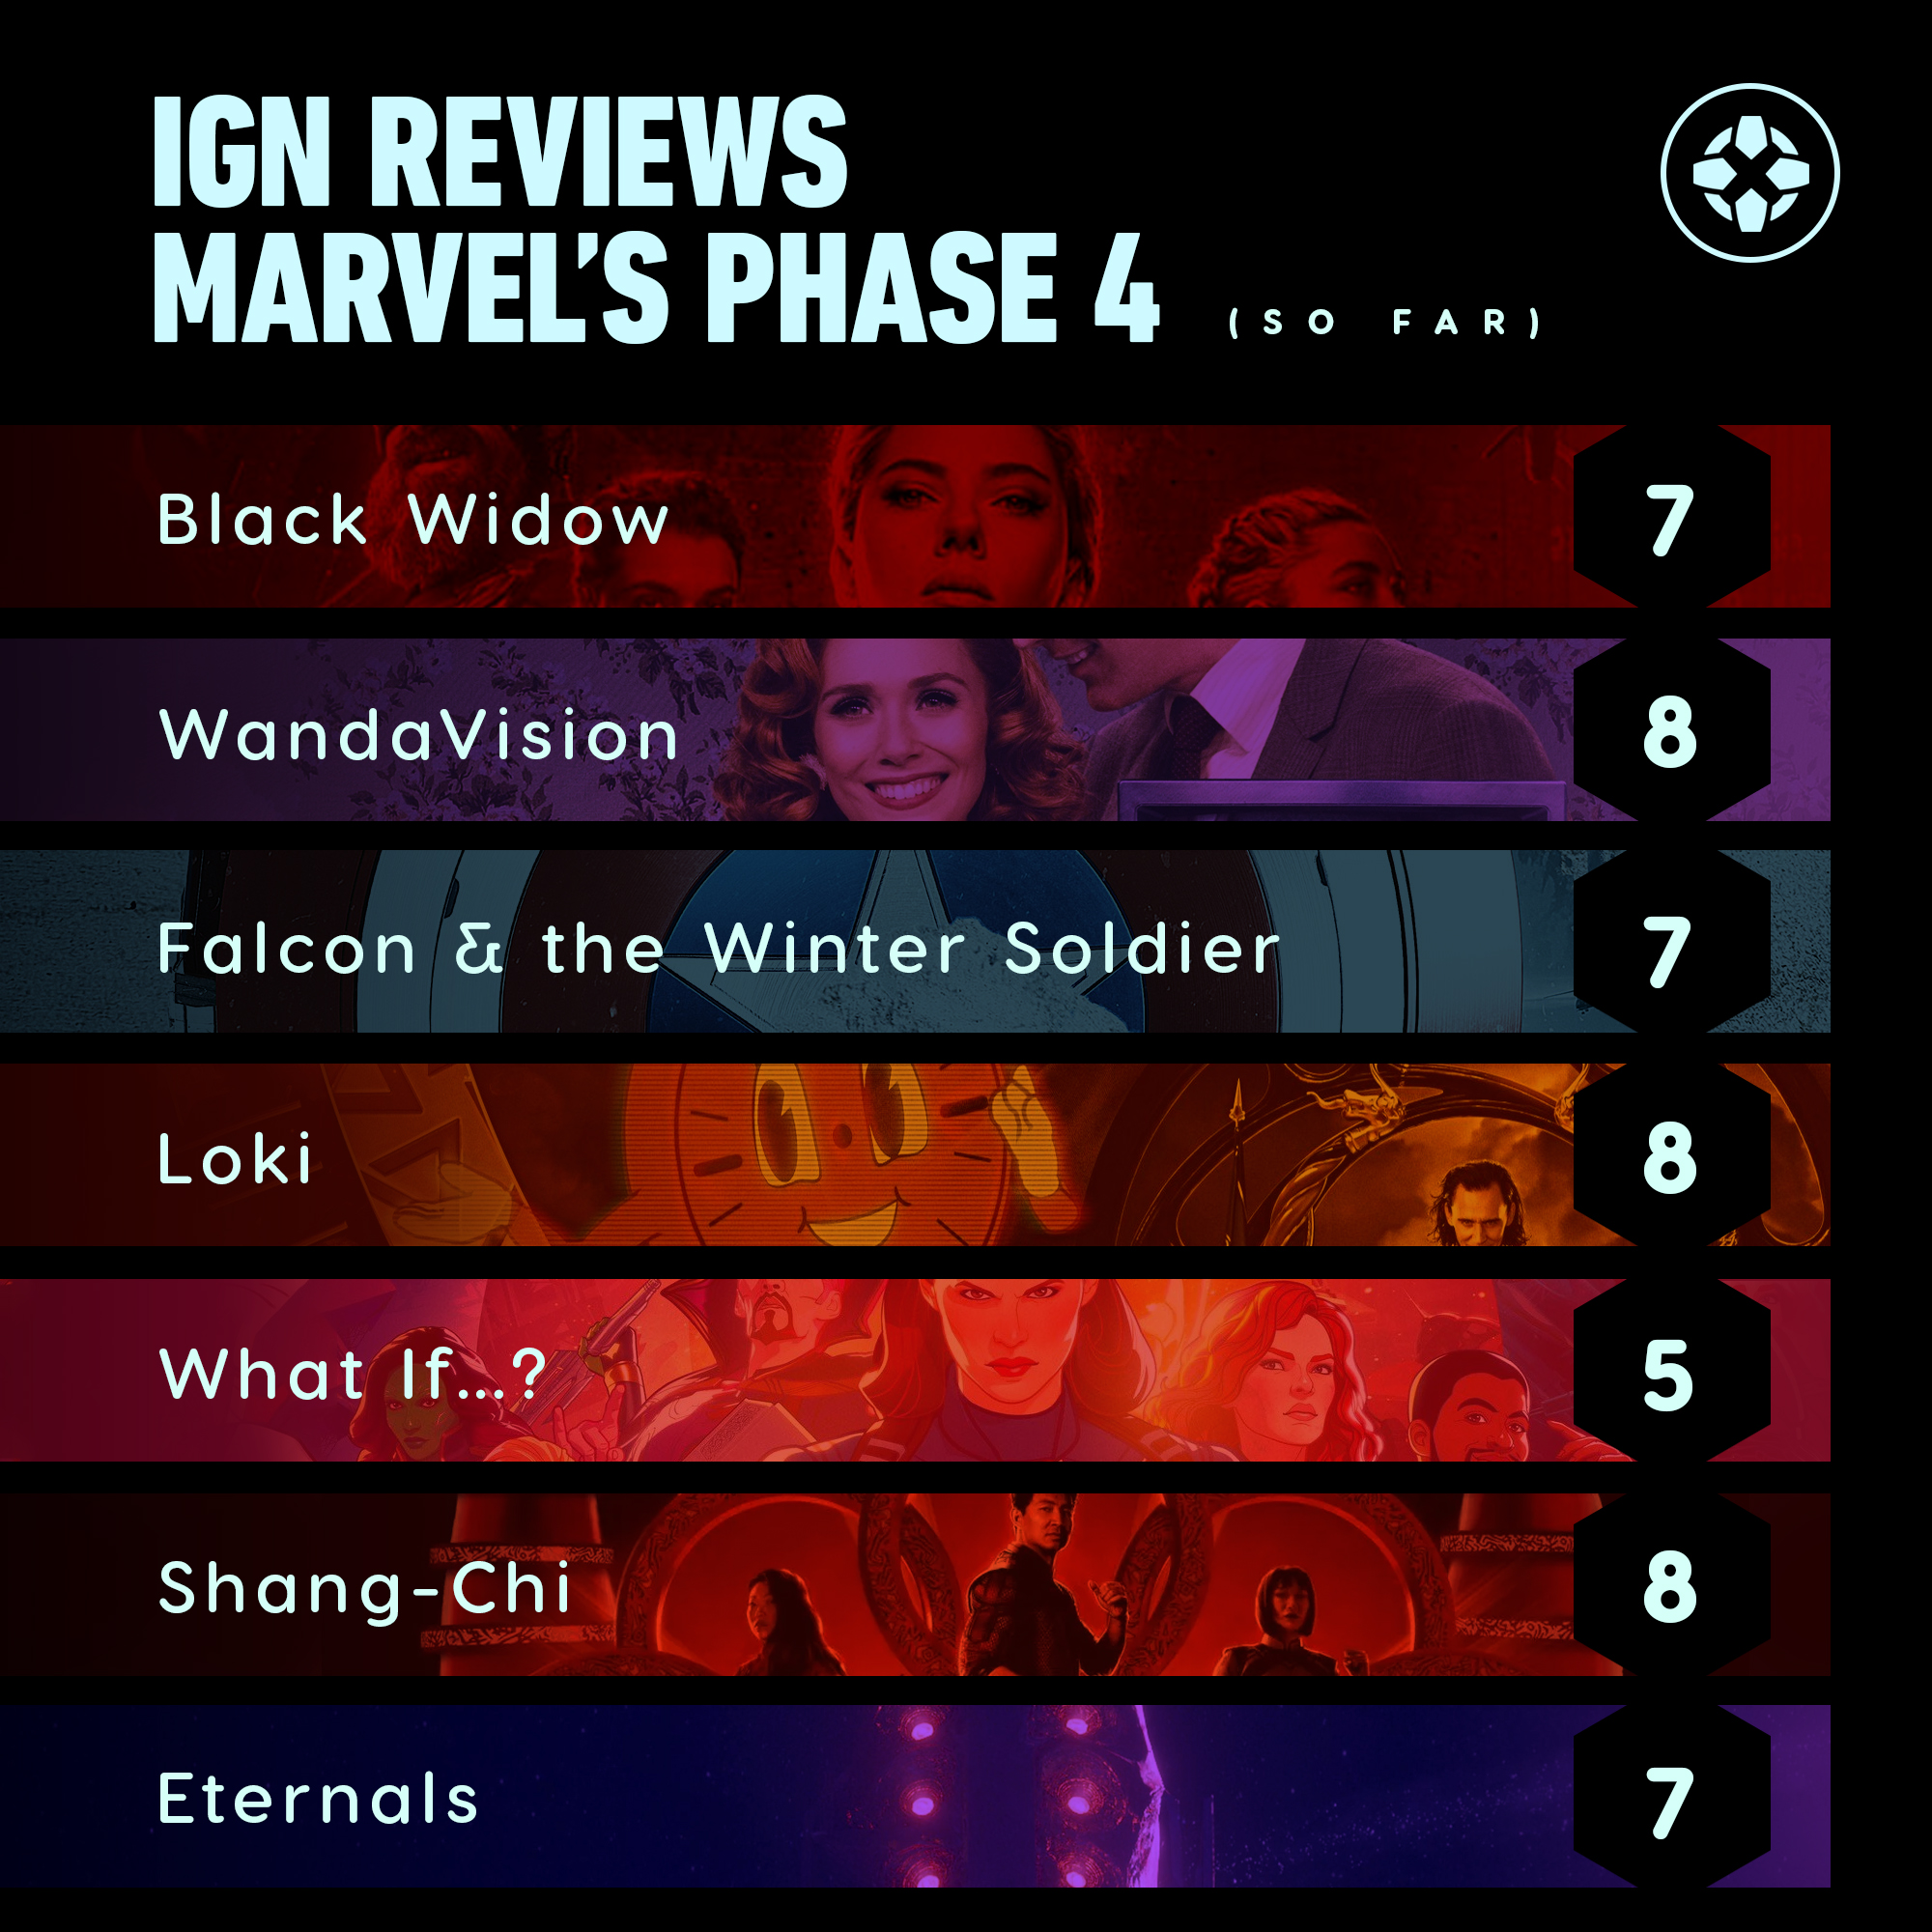 Marvel Future Fight - IGN